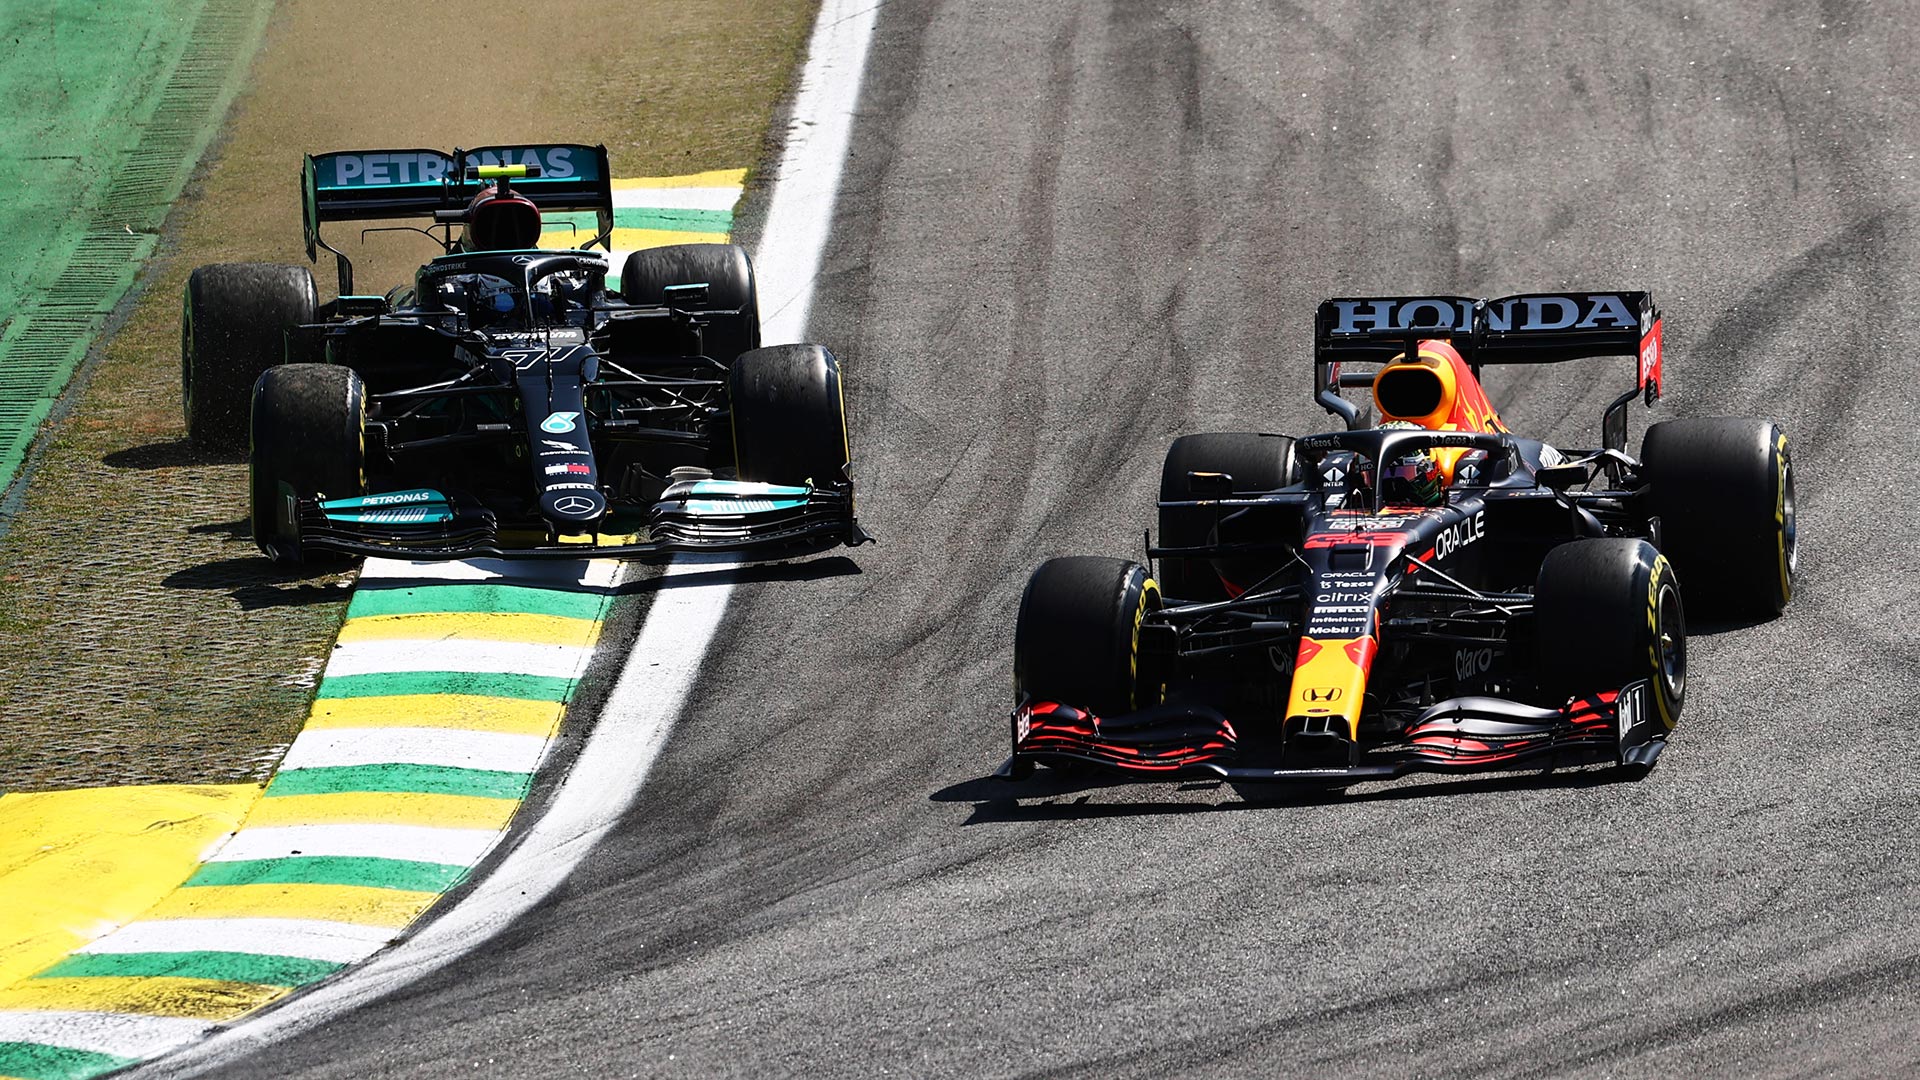 GP do Brasil de Fórmula 1 bate recorde